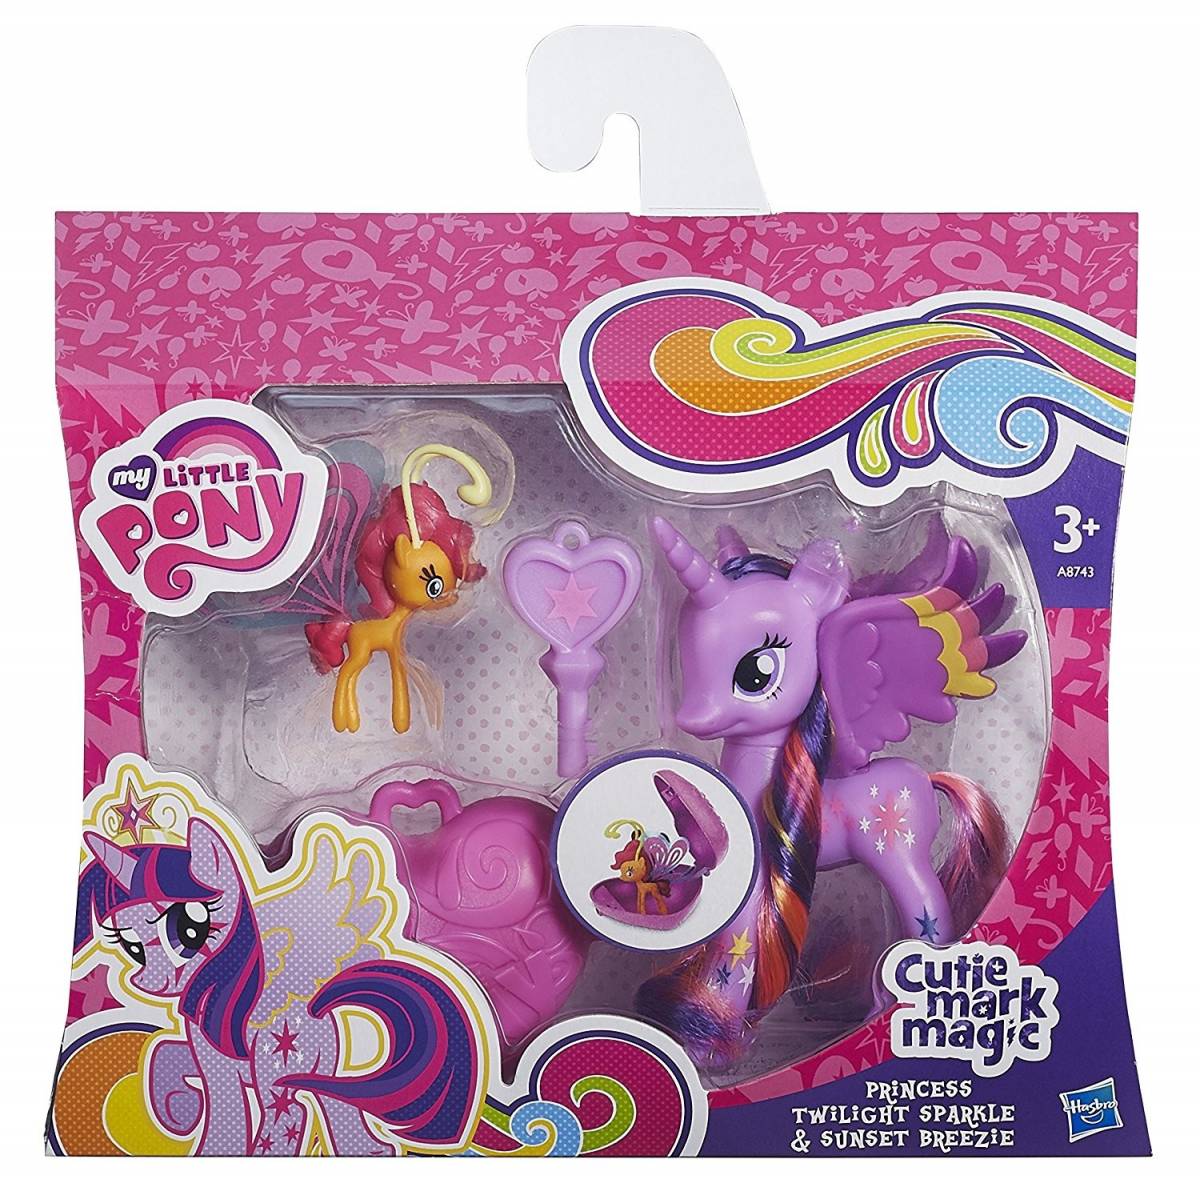 My Little Pony - Cutie Mark Magic - Princess Twilight Sparkle & Sunset Breezie